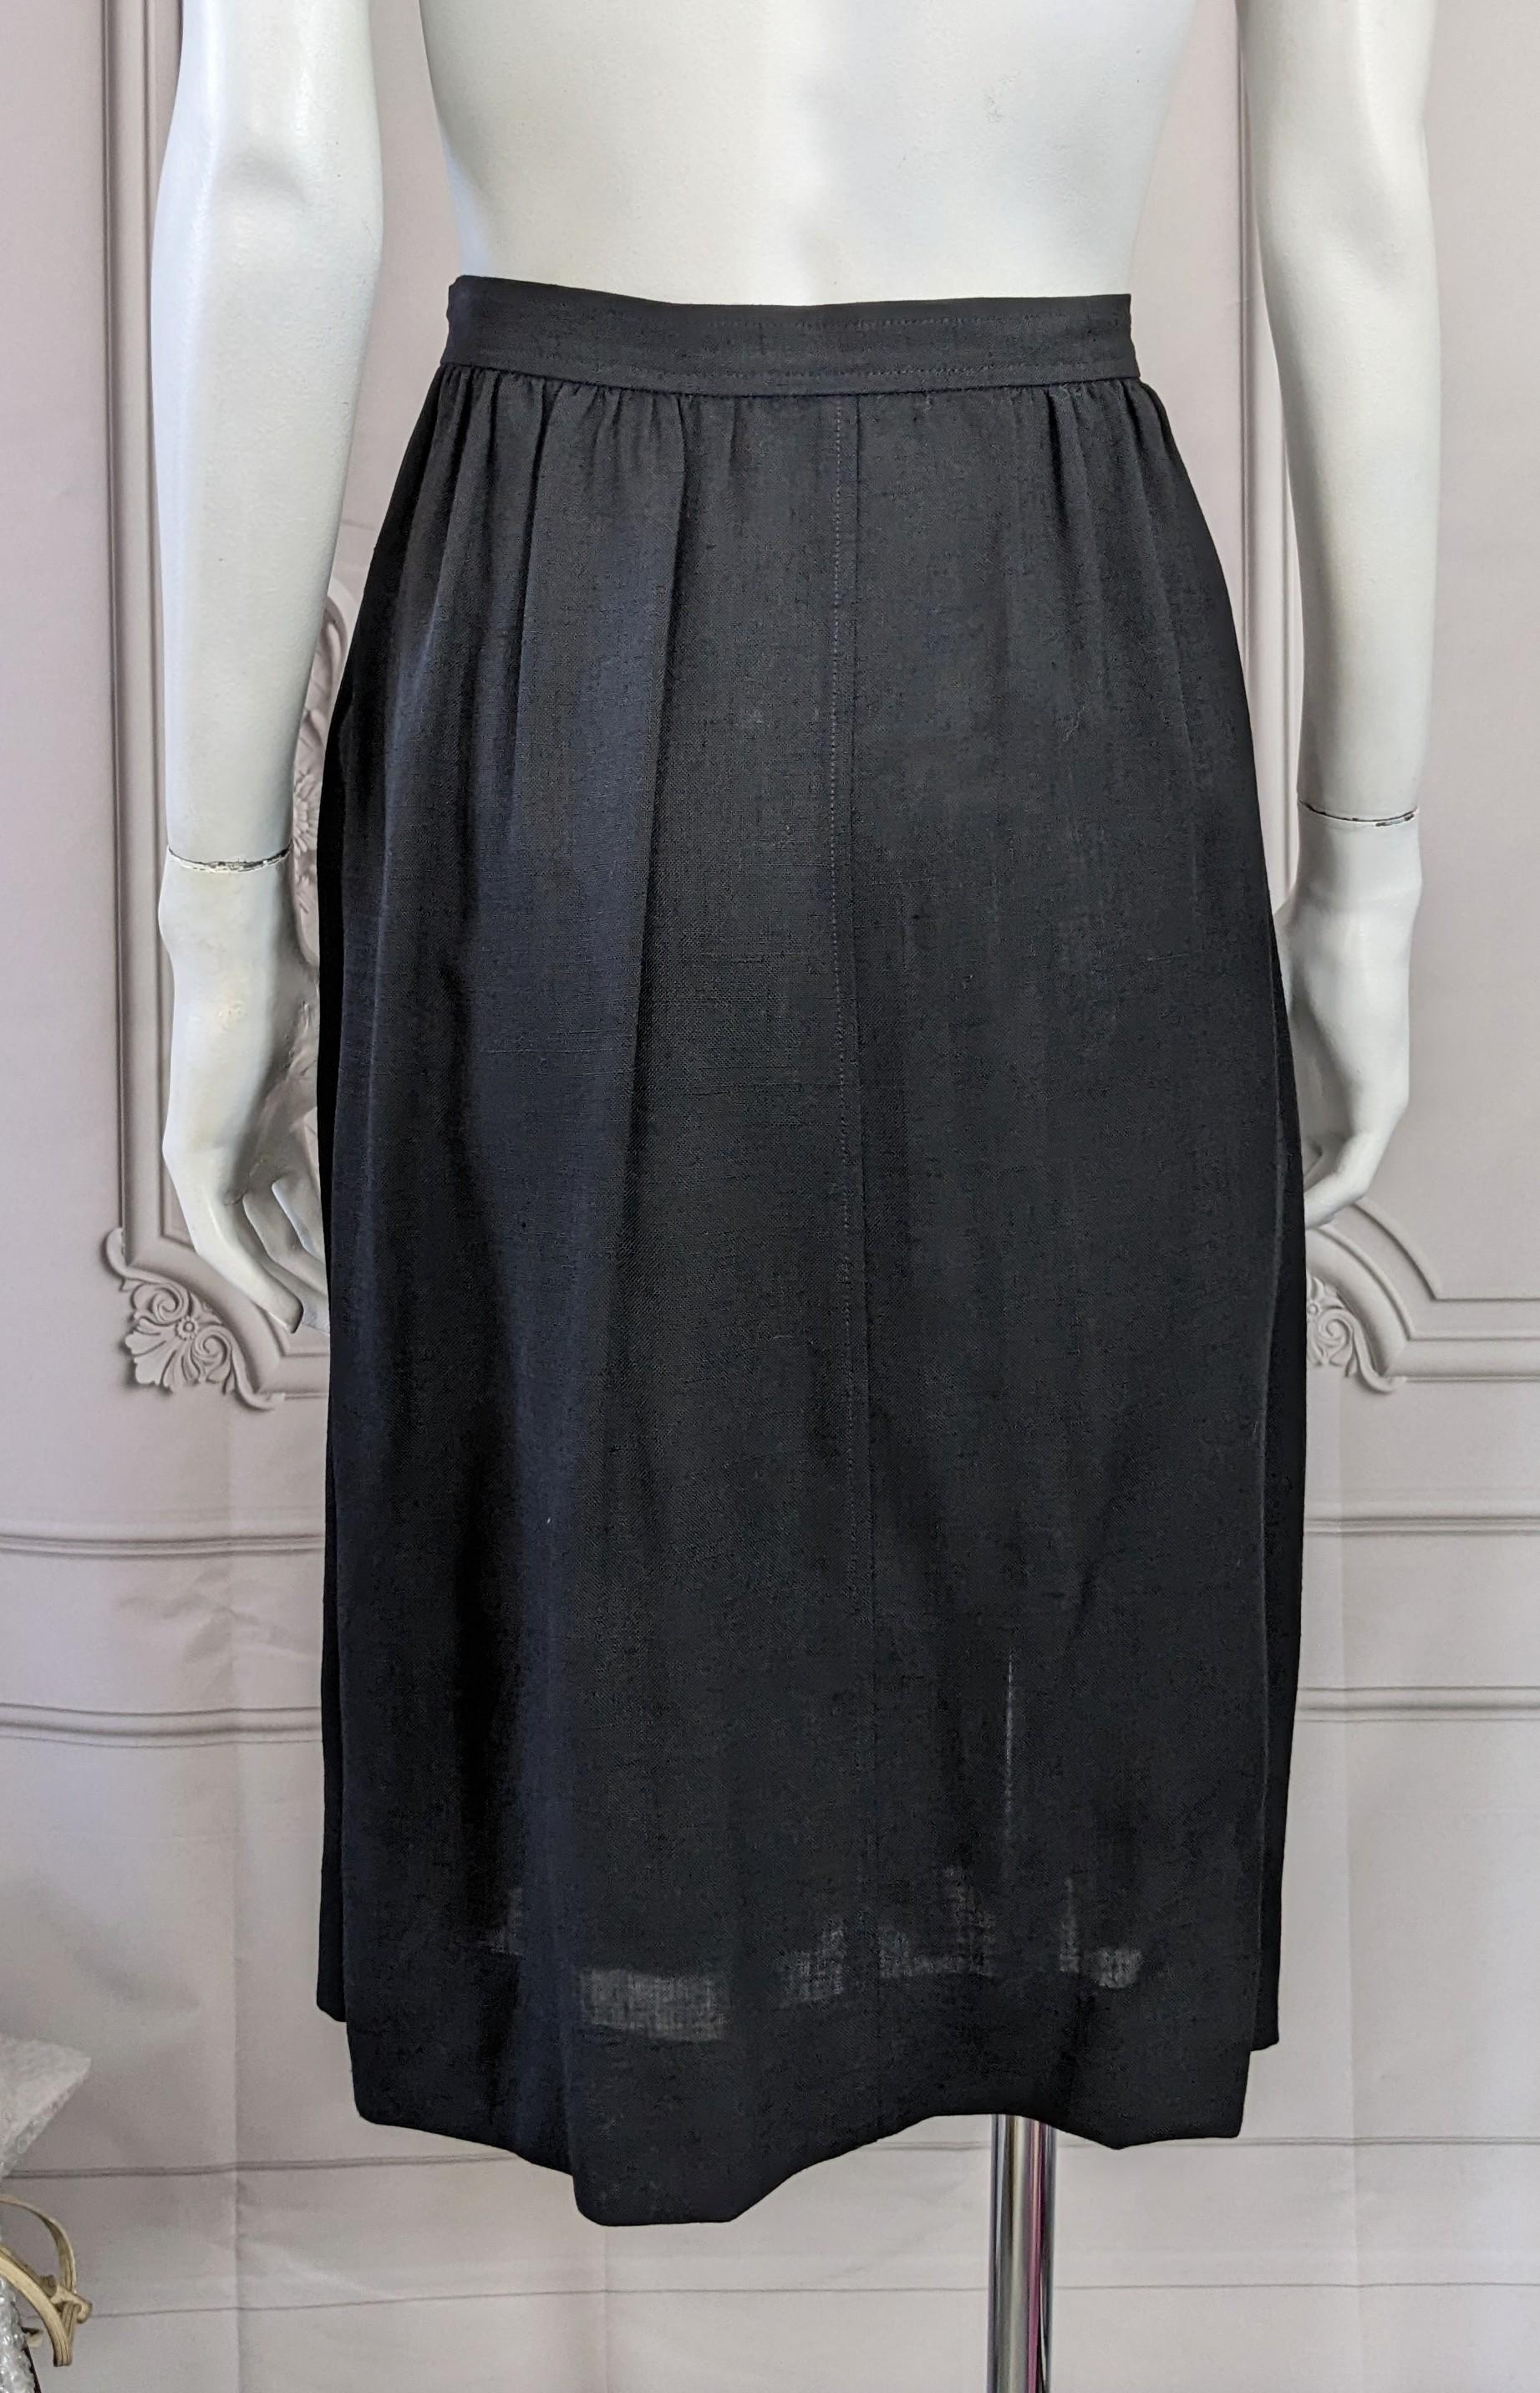 Yves Saint Laurent Fibranne Skirt, Rive Gauche In Good Condition For Sale In New York, NY